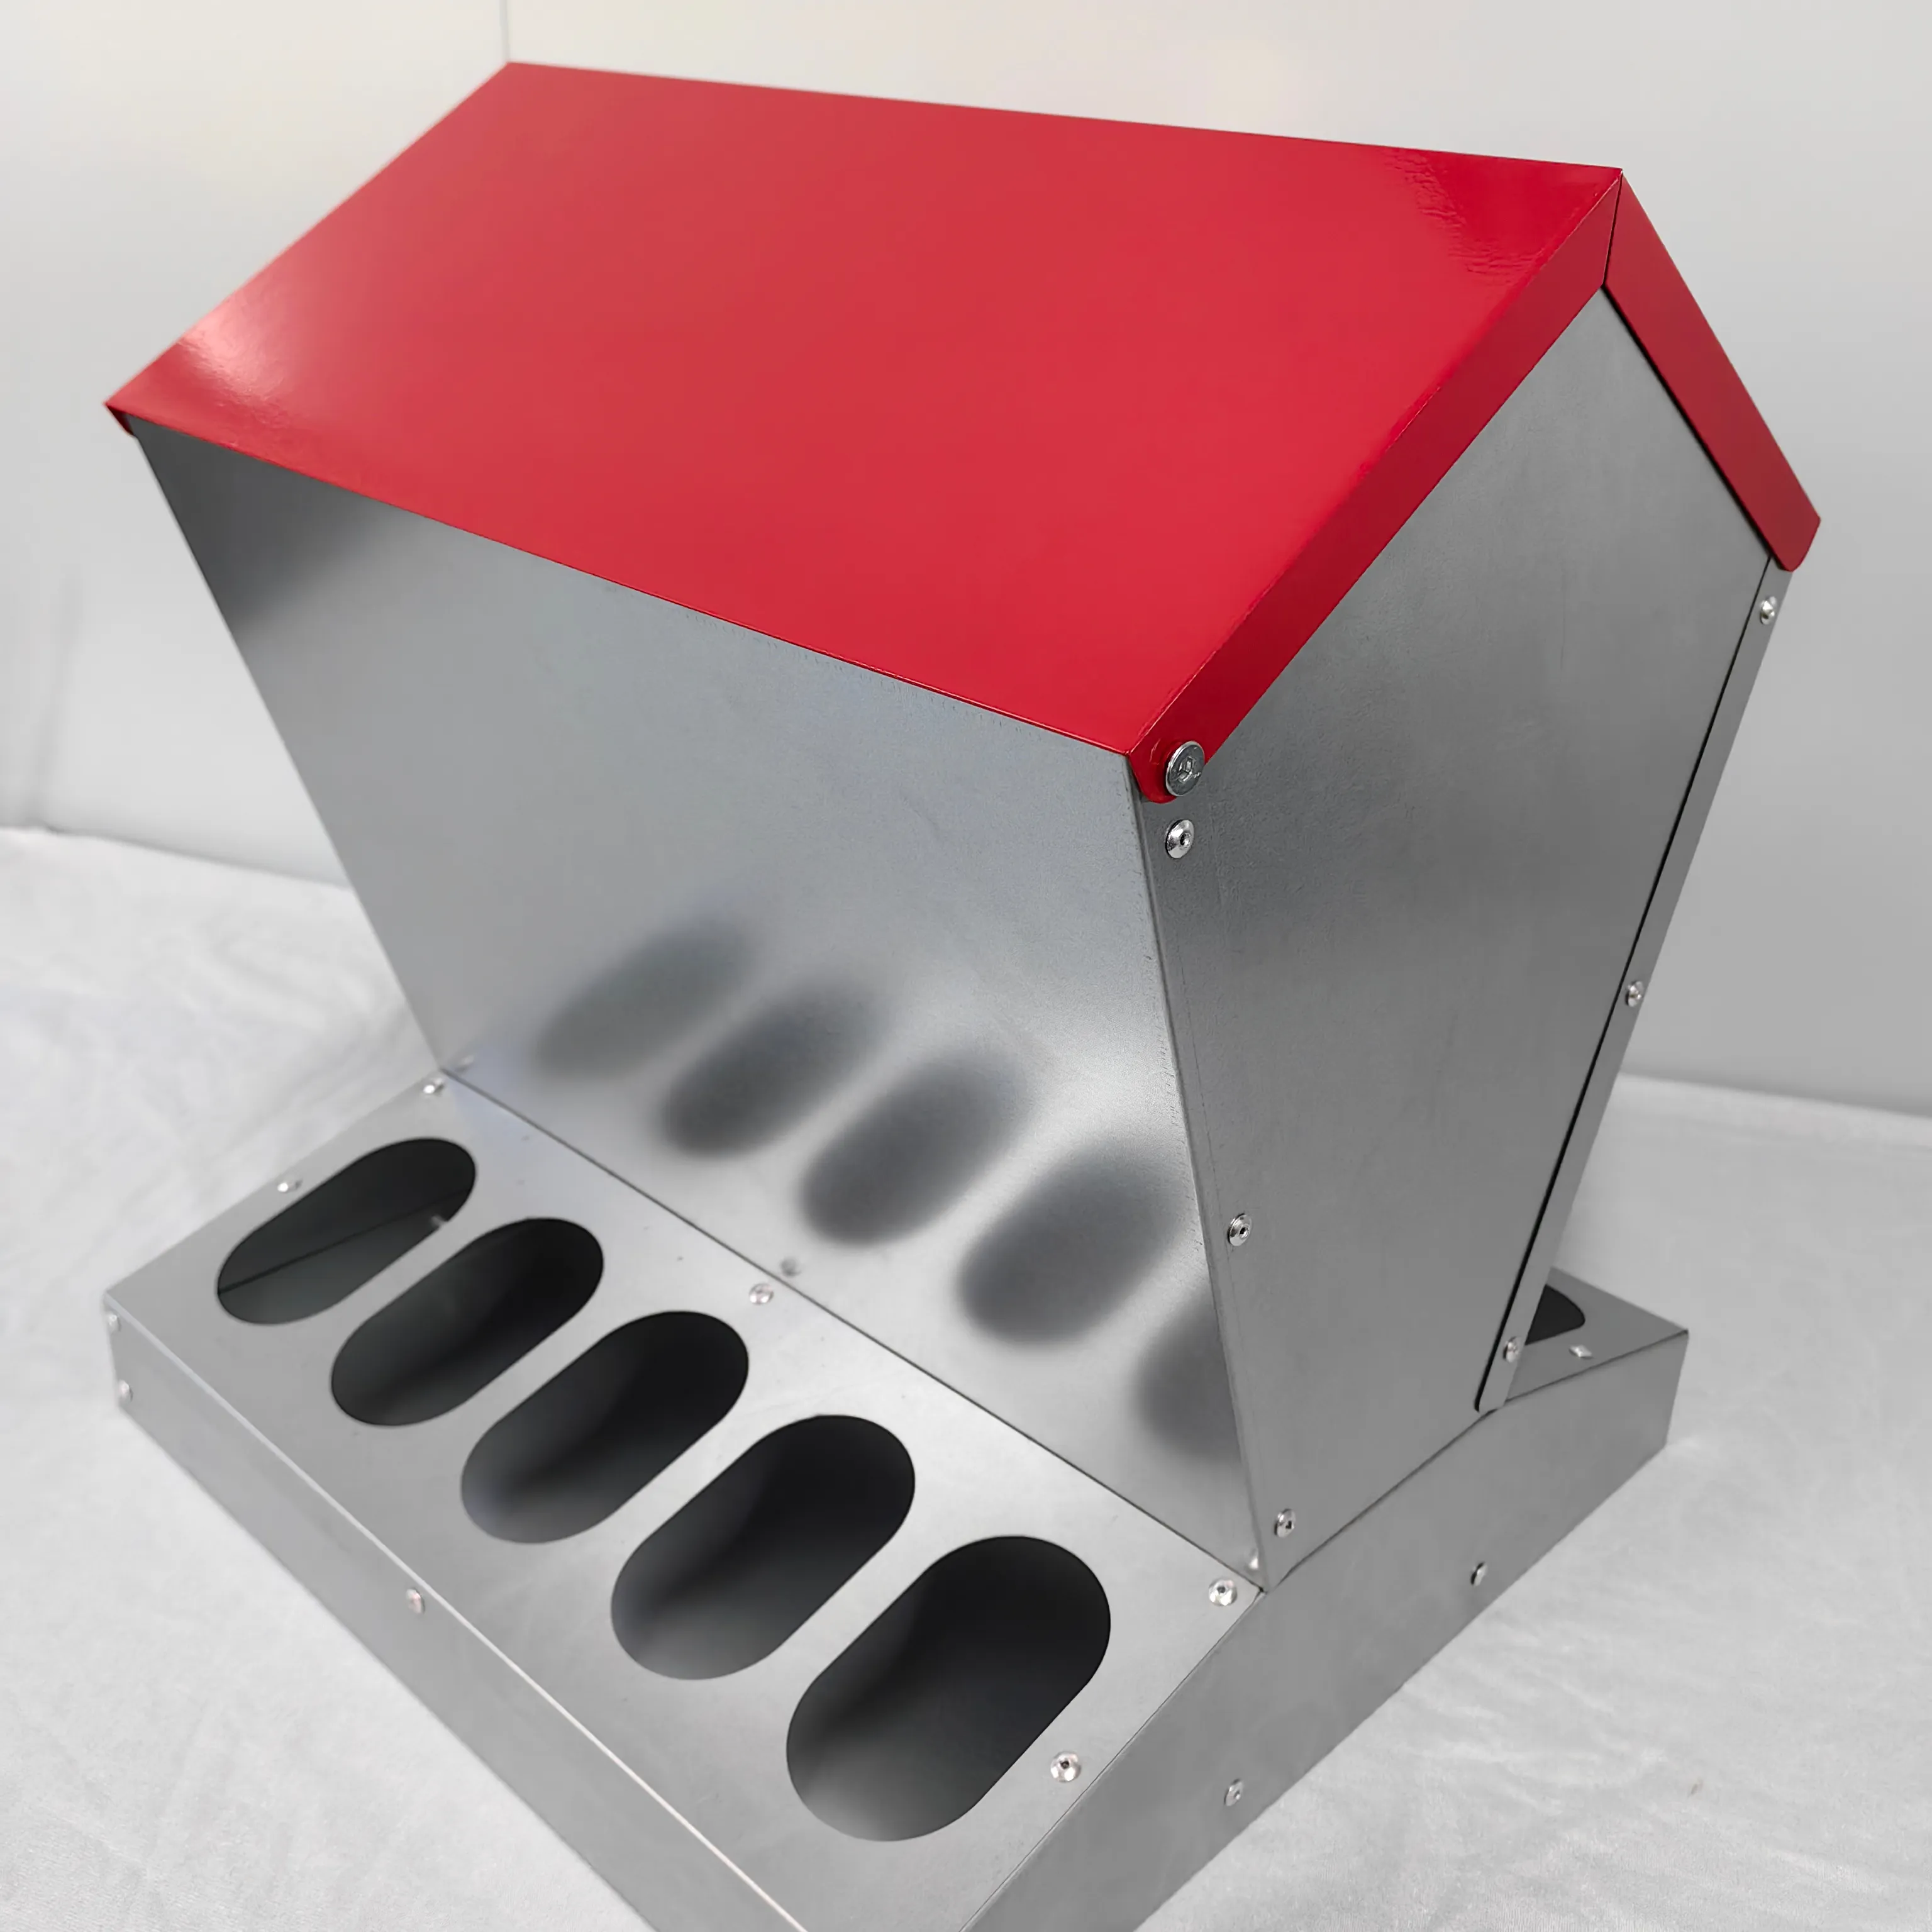 Equipo de alimentación de pollos Sistema de alimentación automático Alimento de pollo galvanizado pintado